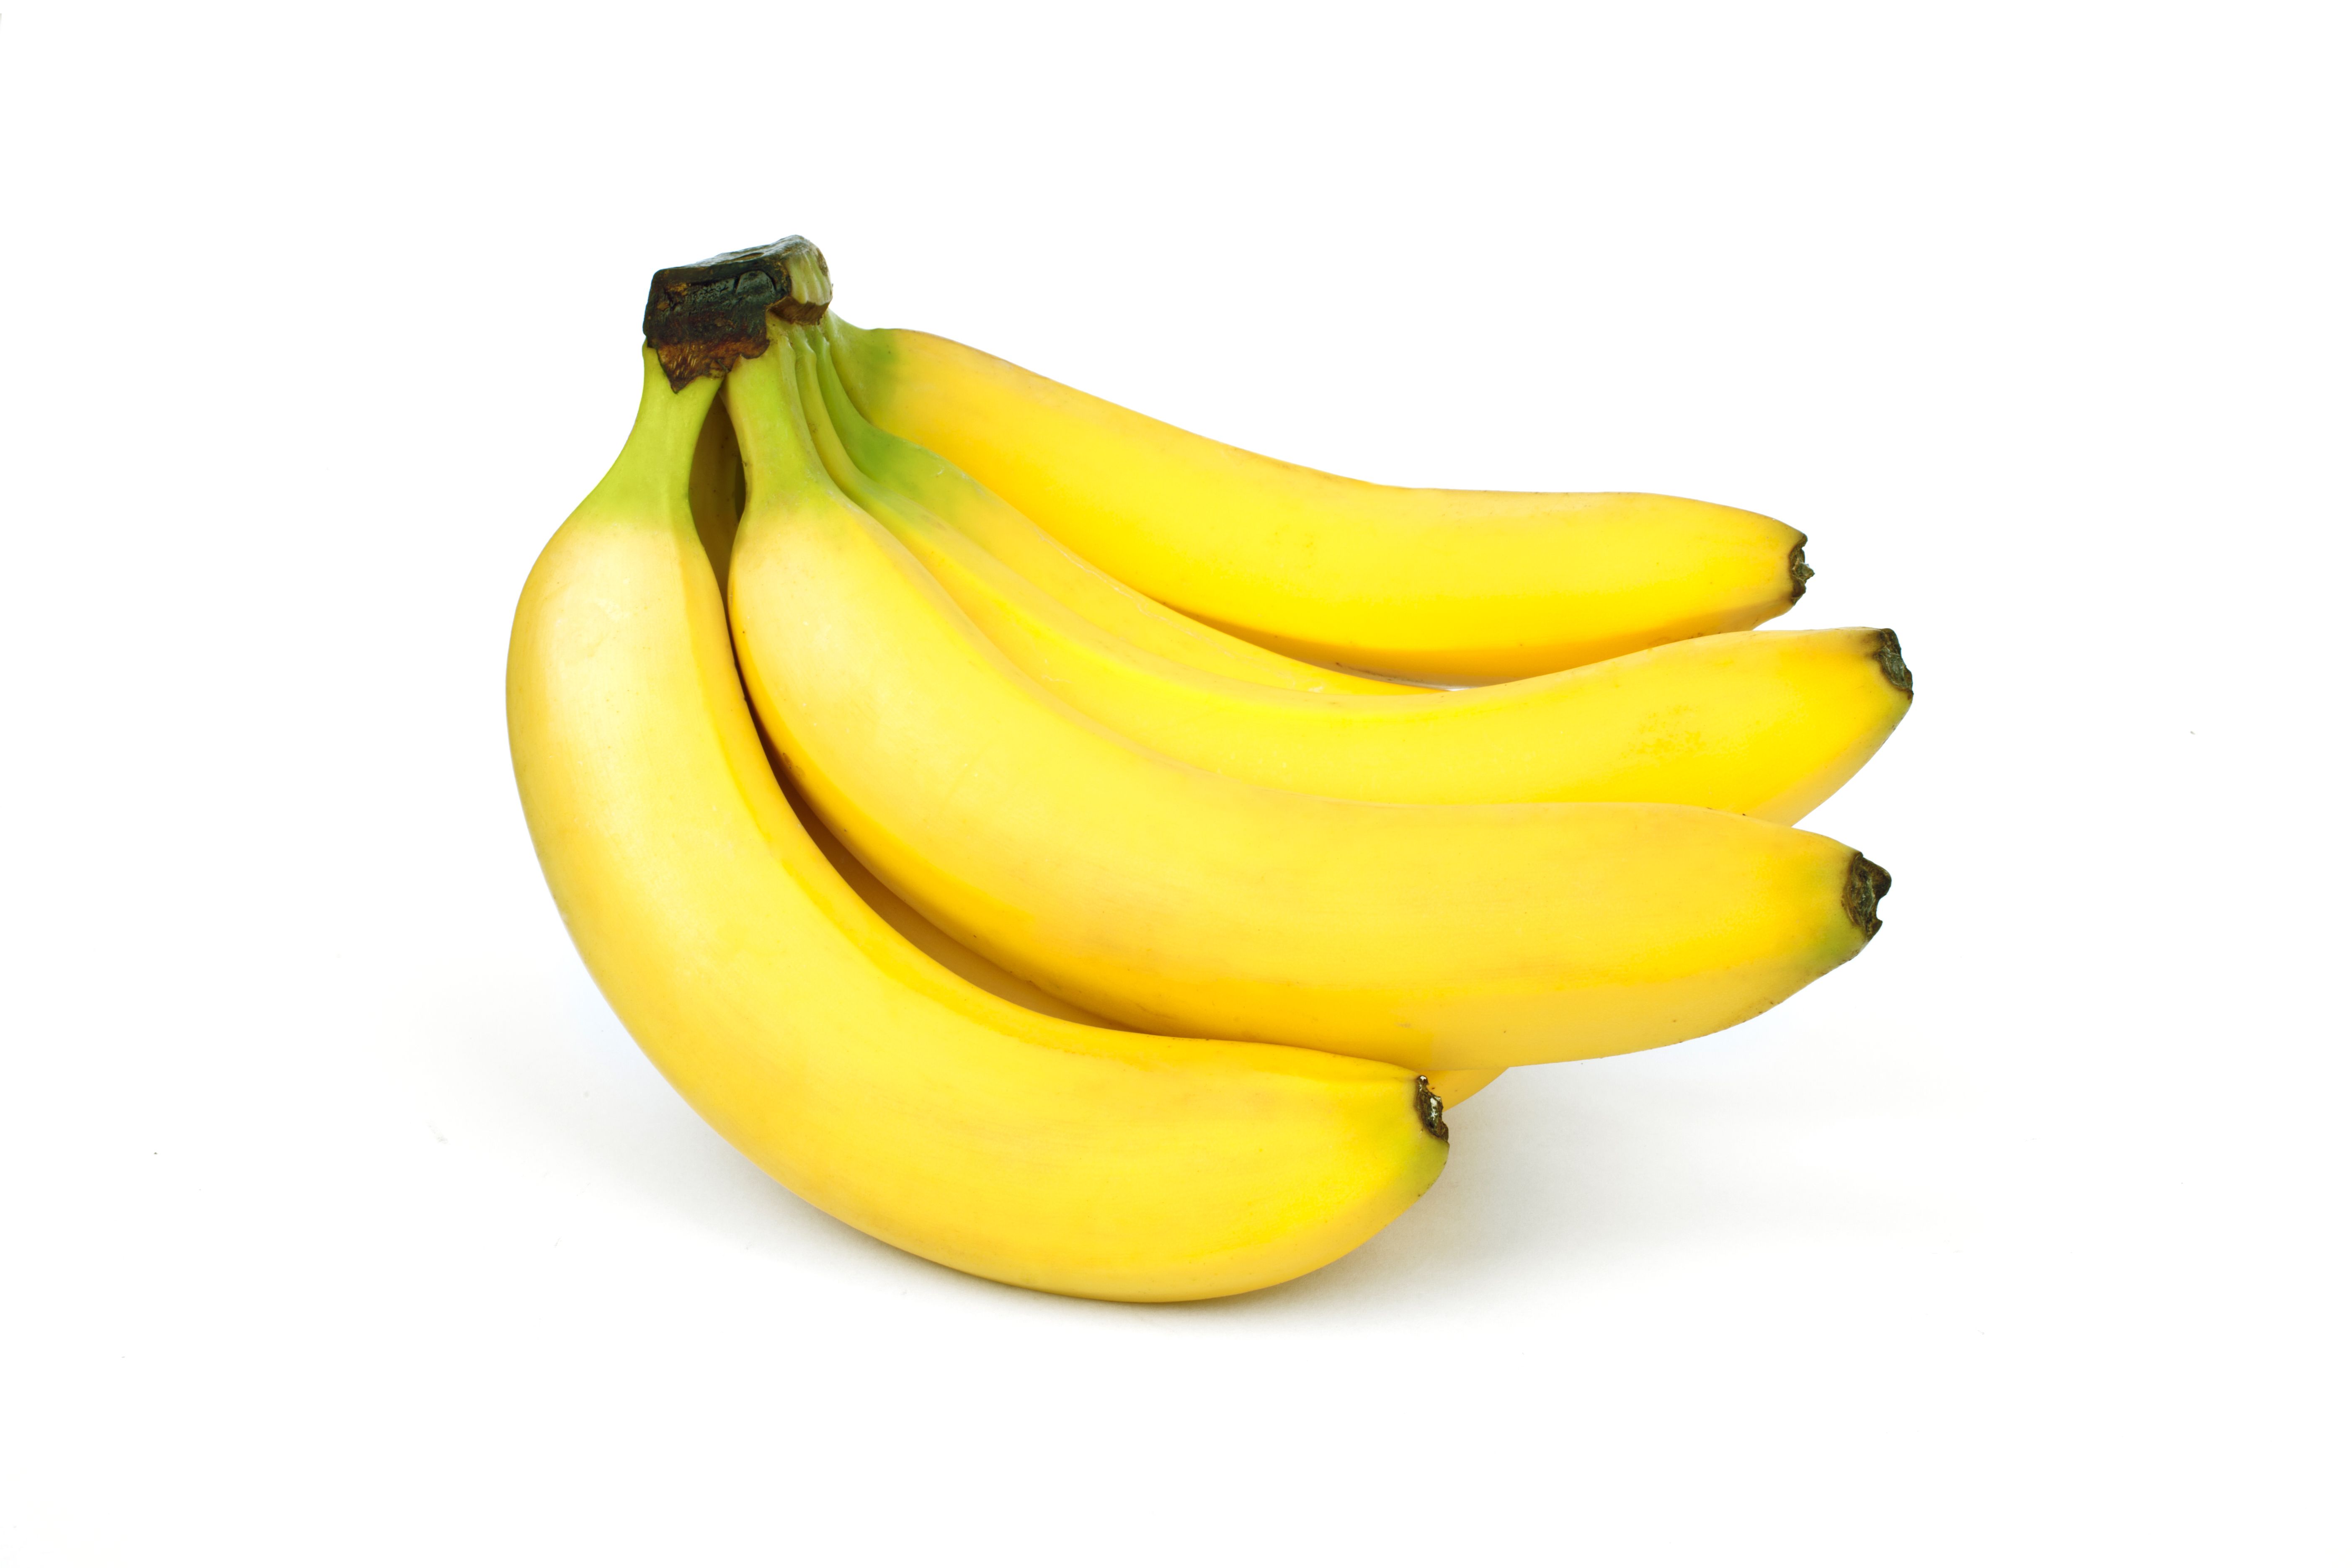 cacho de bananas isolado no fundo branco